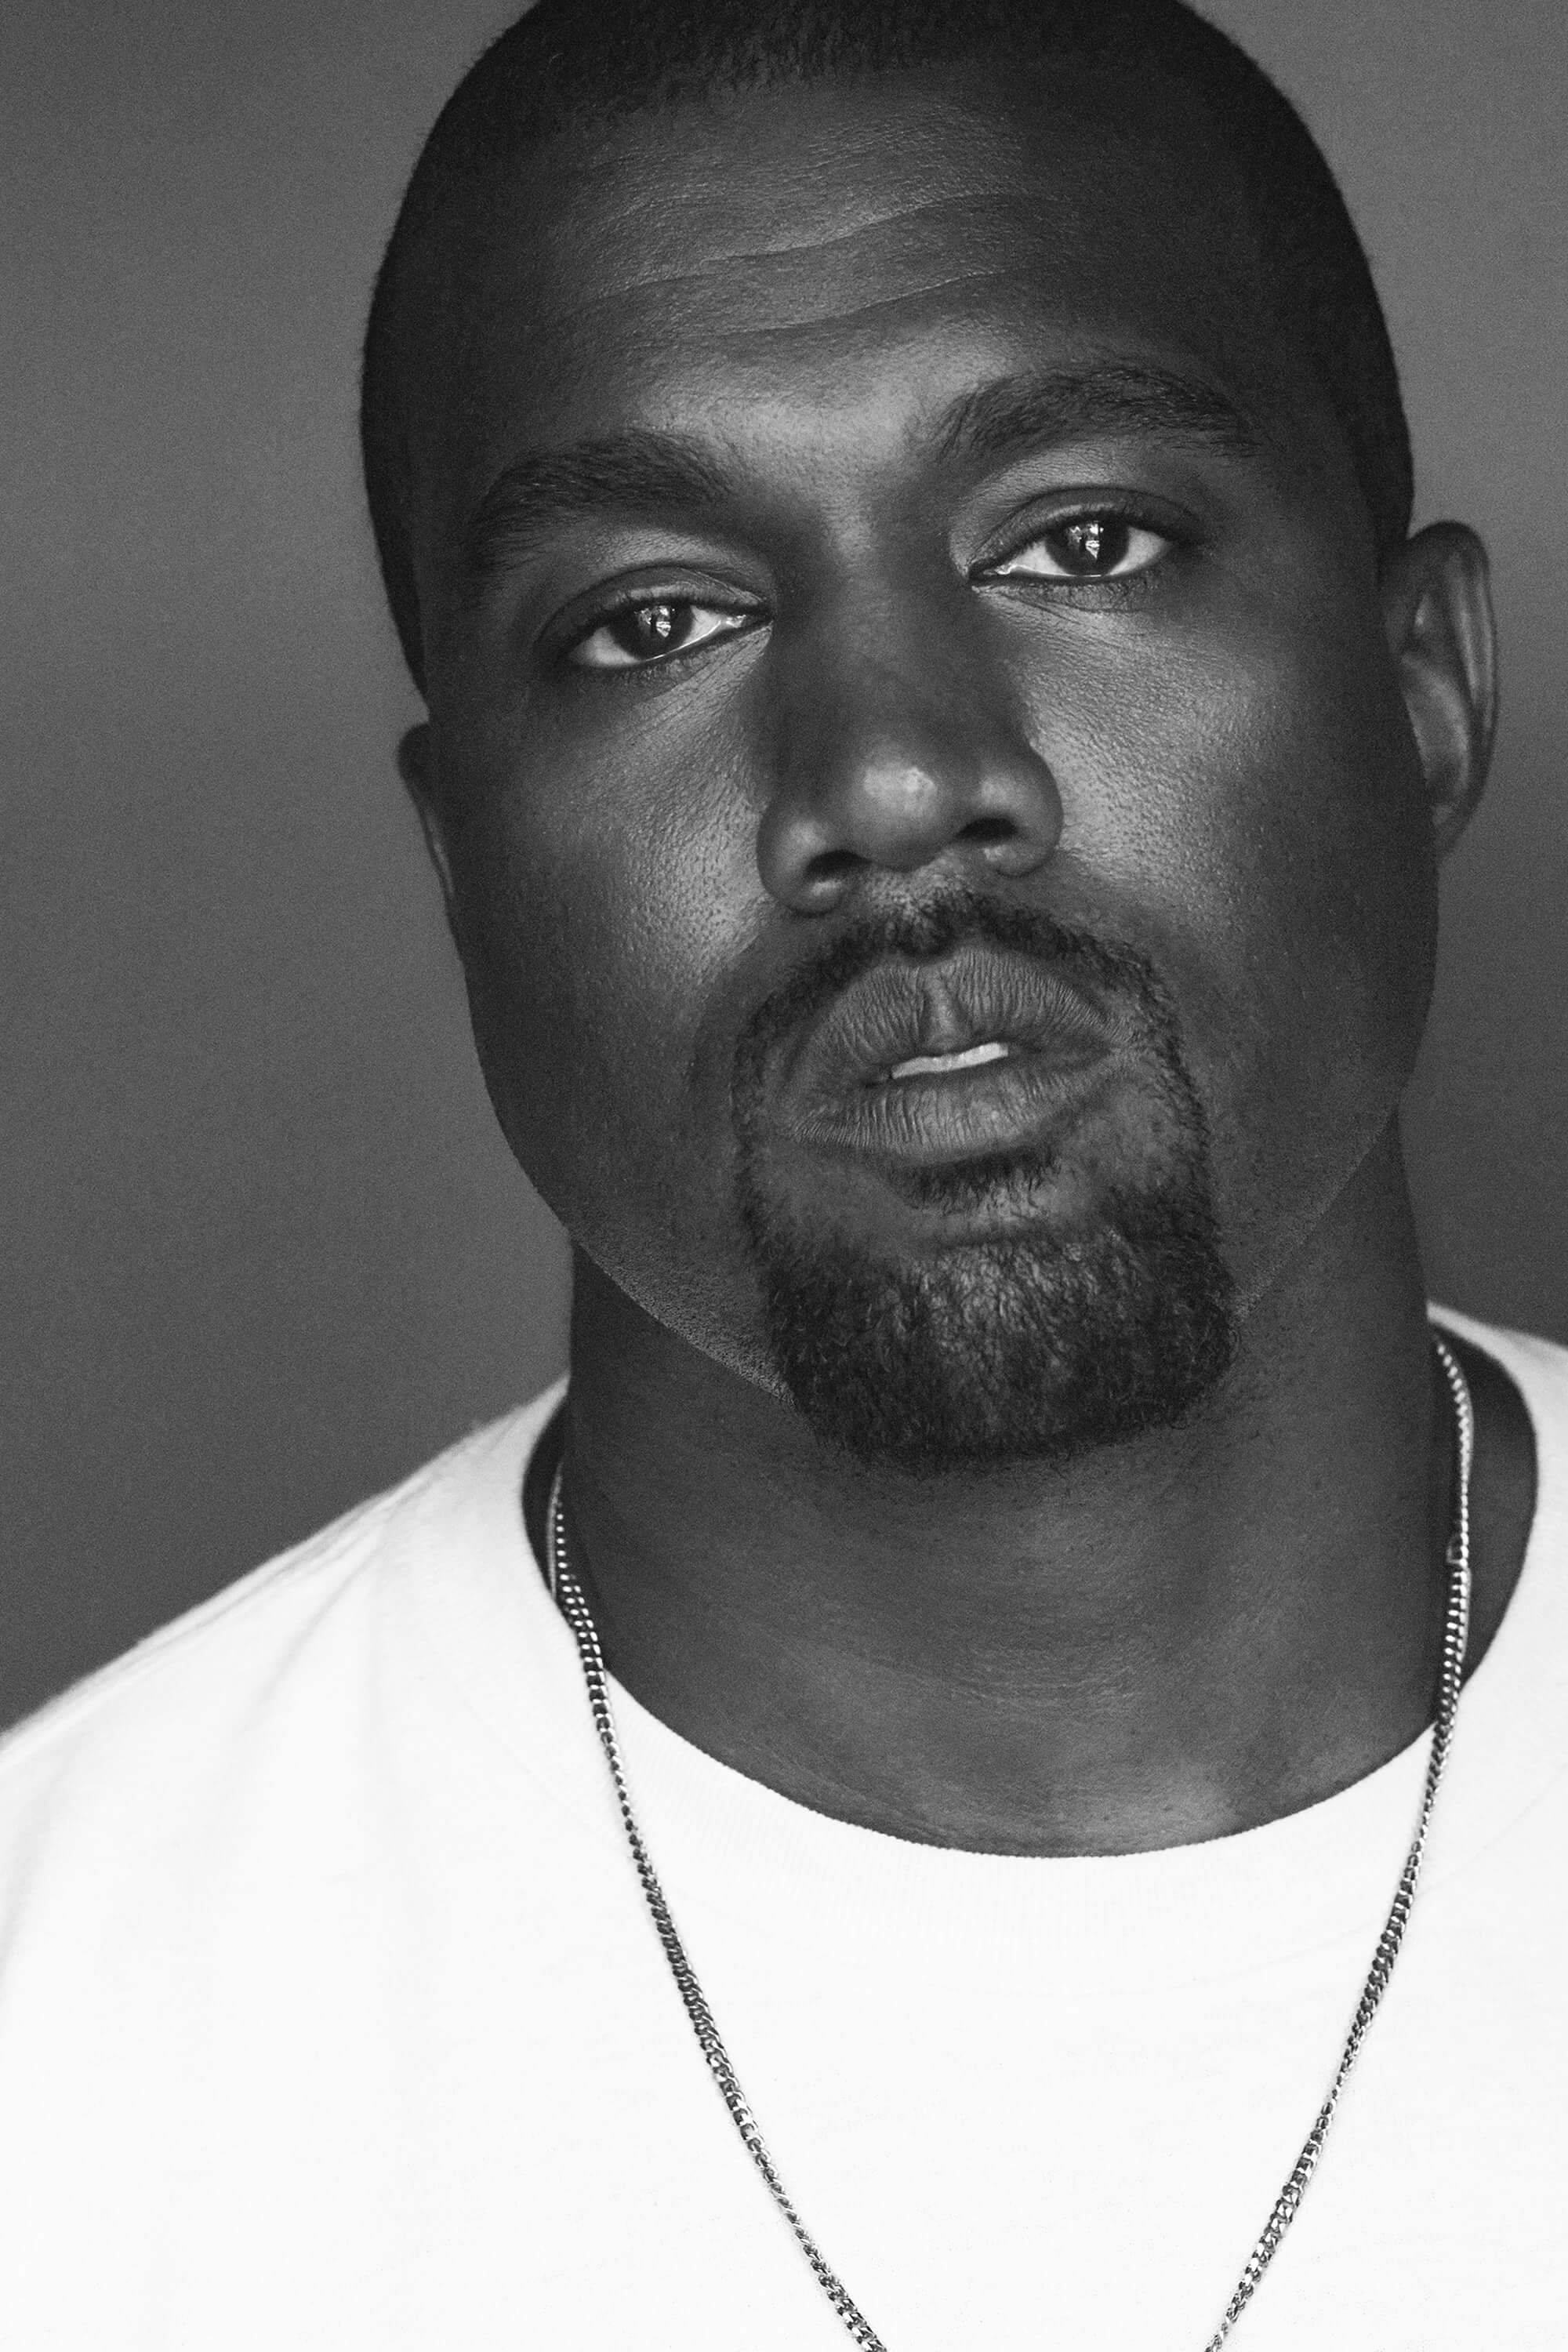 How to Sample Like Kanye West